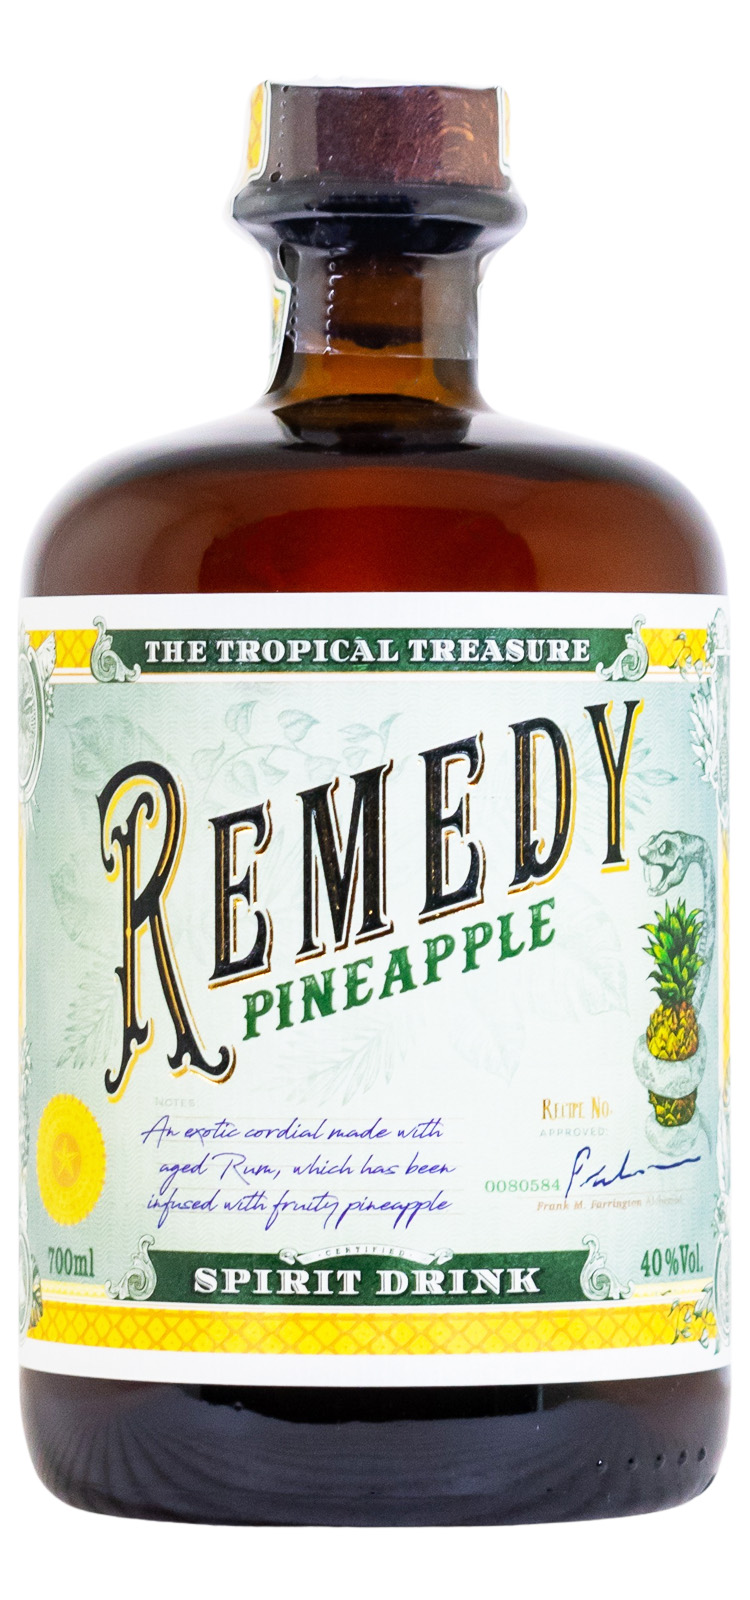 Remedy Pineapple mit Bucket Hat - 0,7L 40% vol